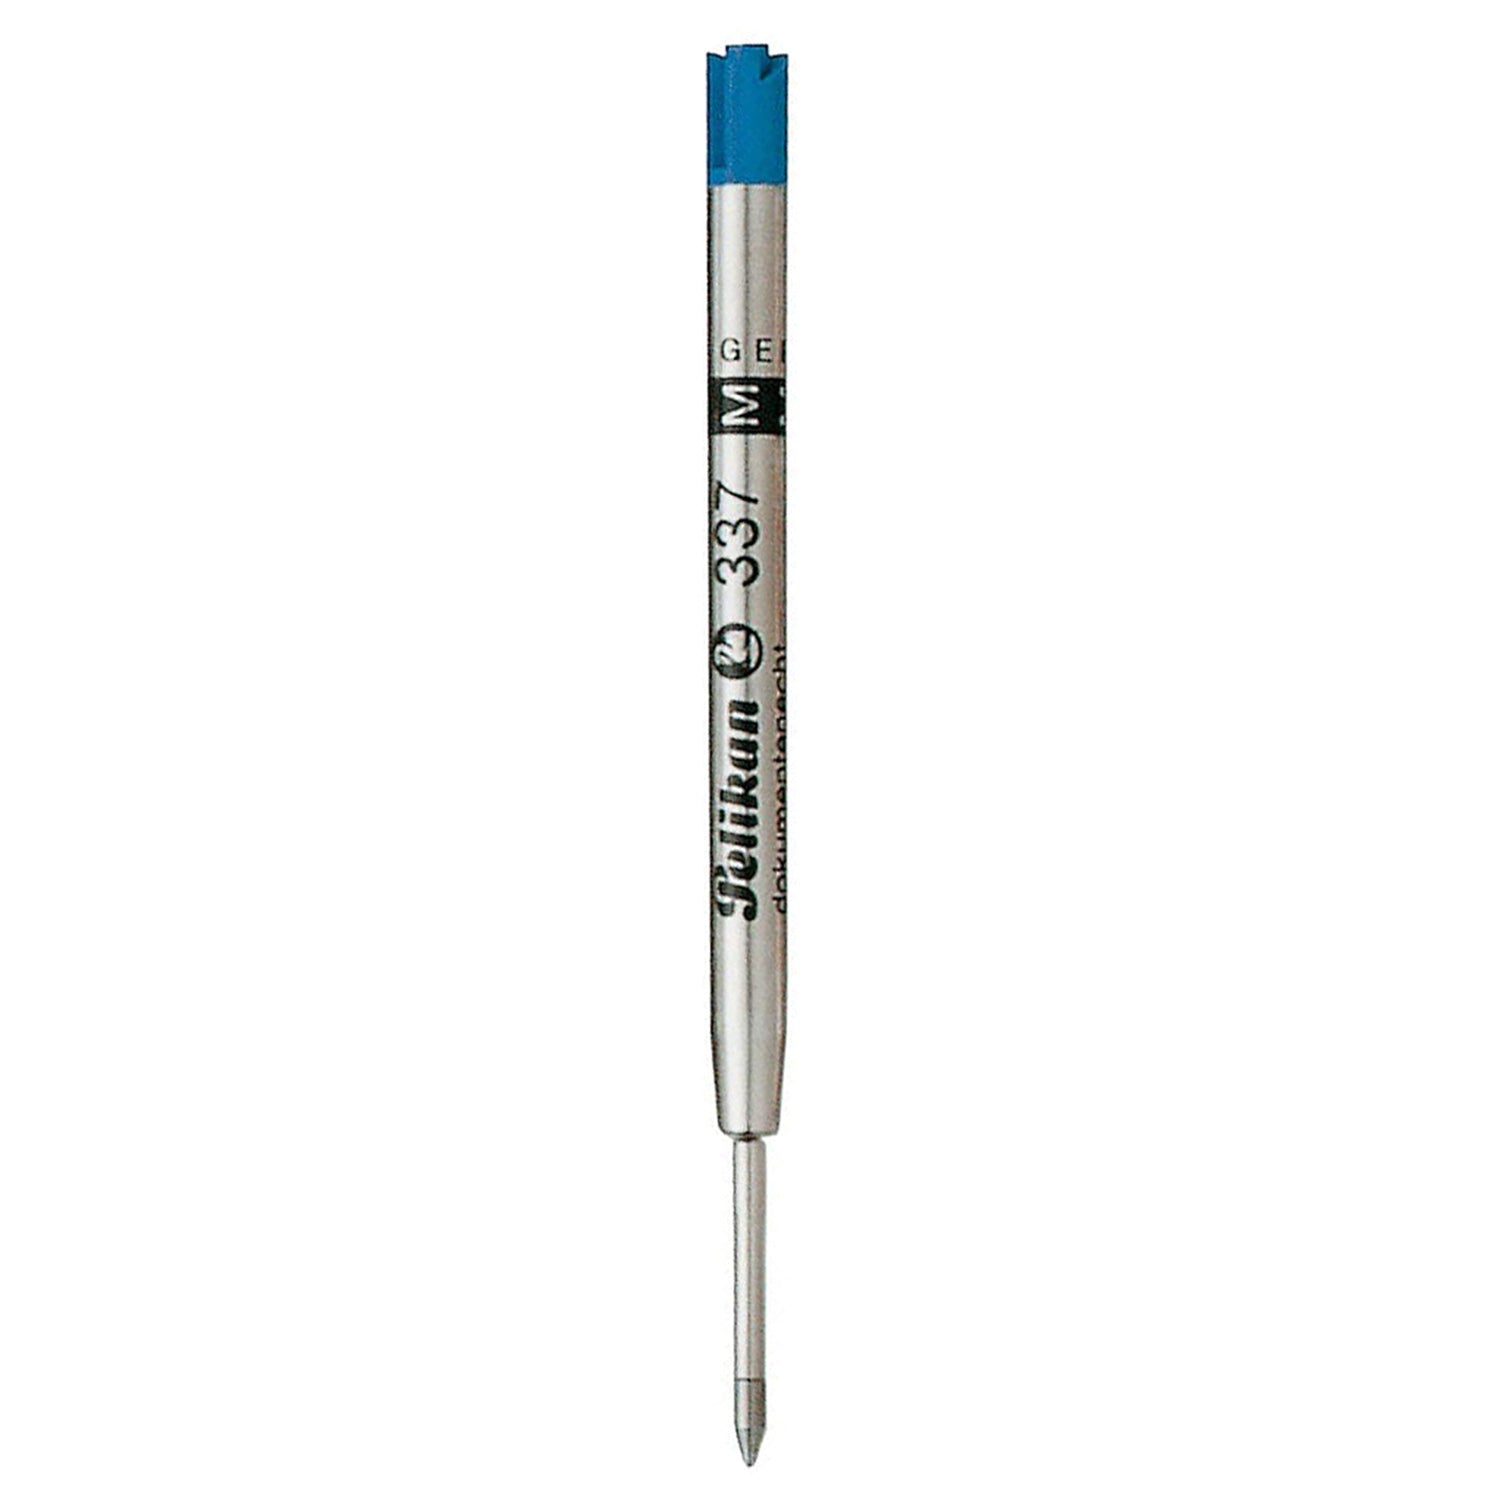 Pelikan 337 Ball Pen Refill available from